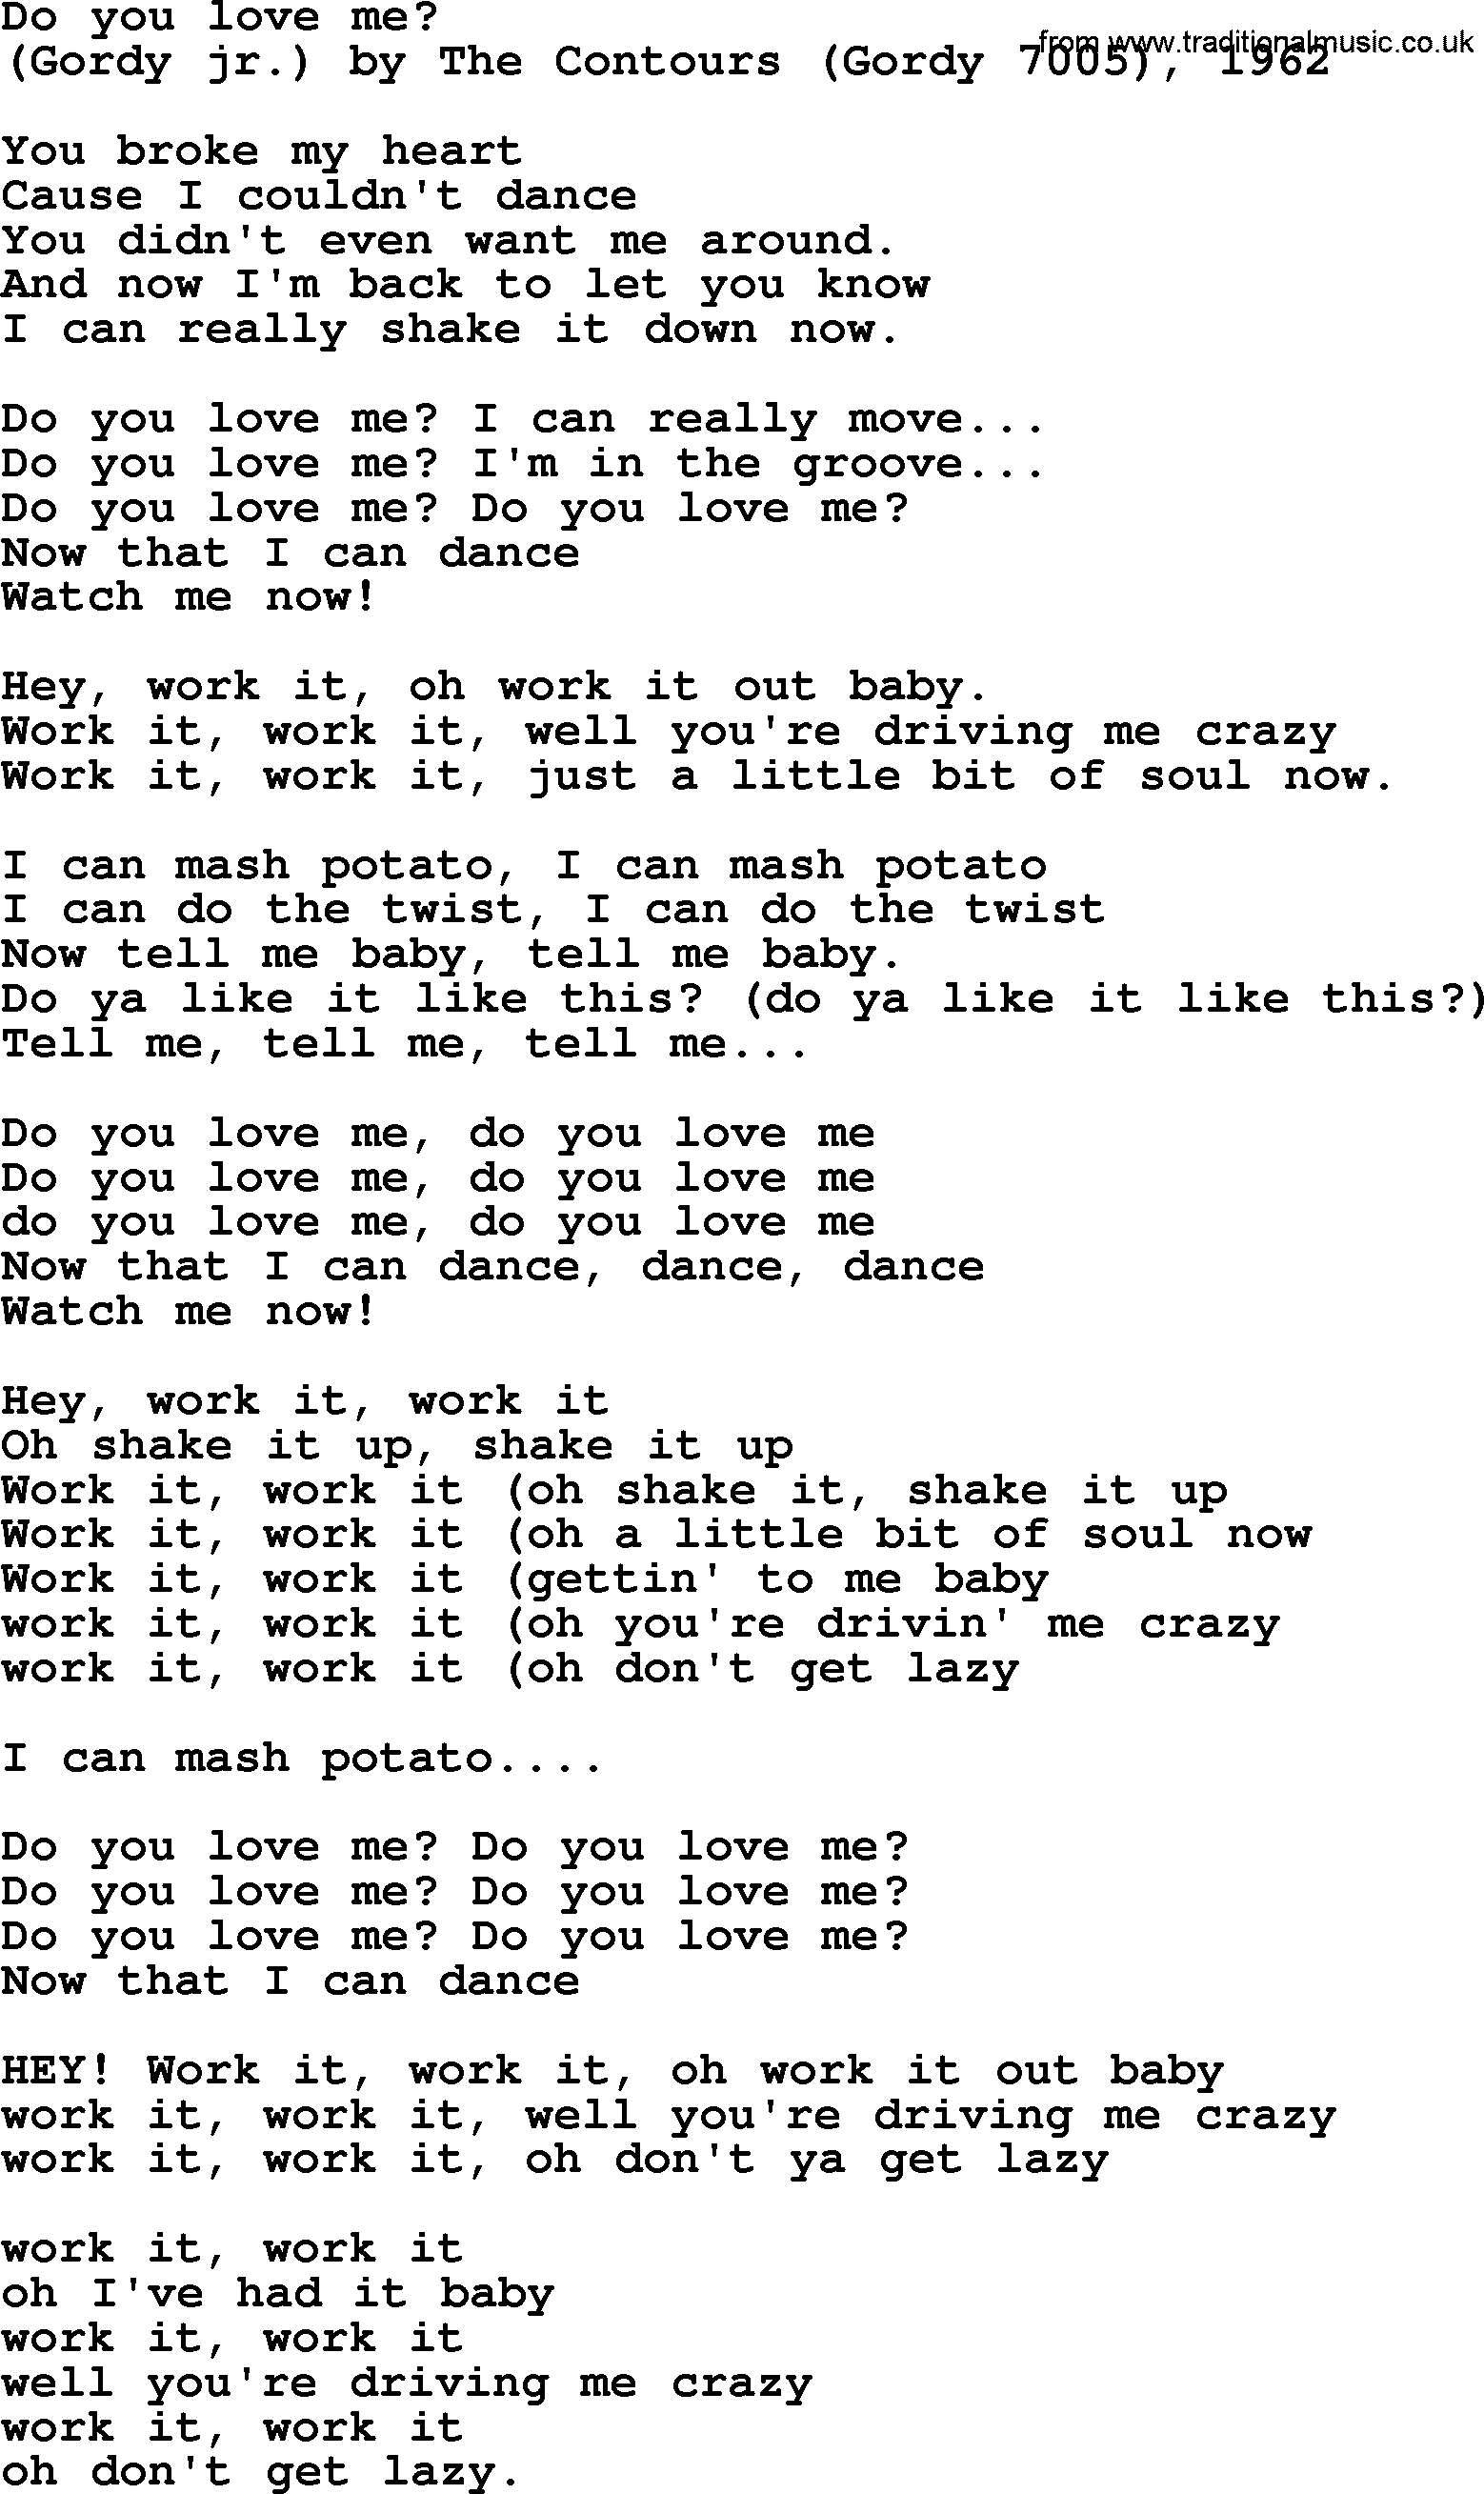 Bruce Springsteen song: Do You Love Me lyrics